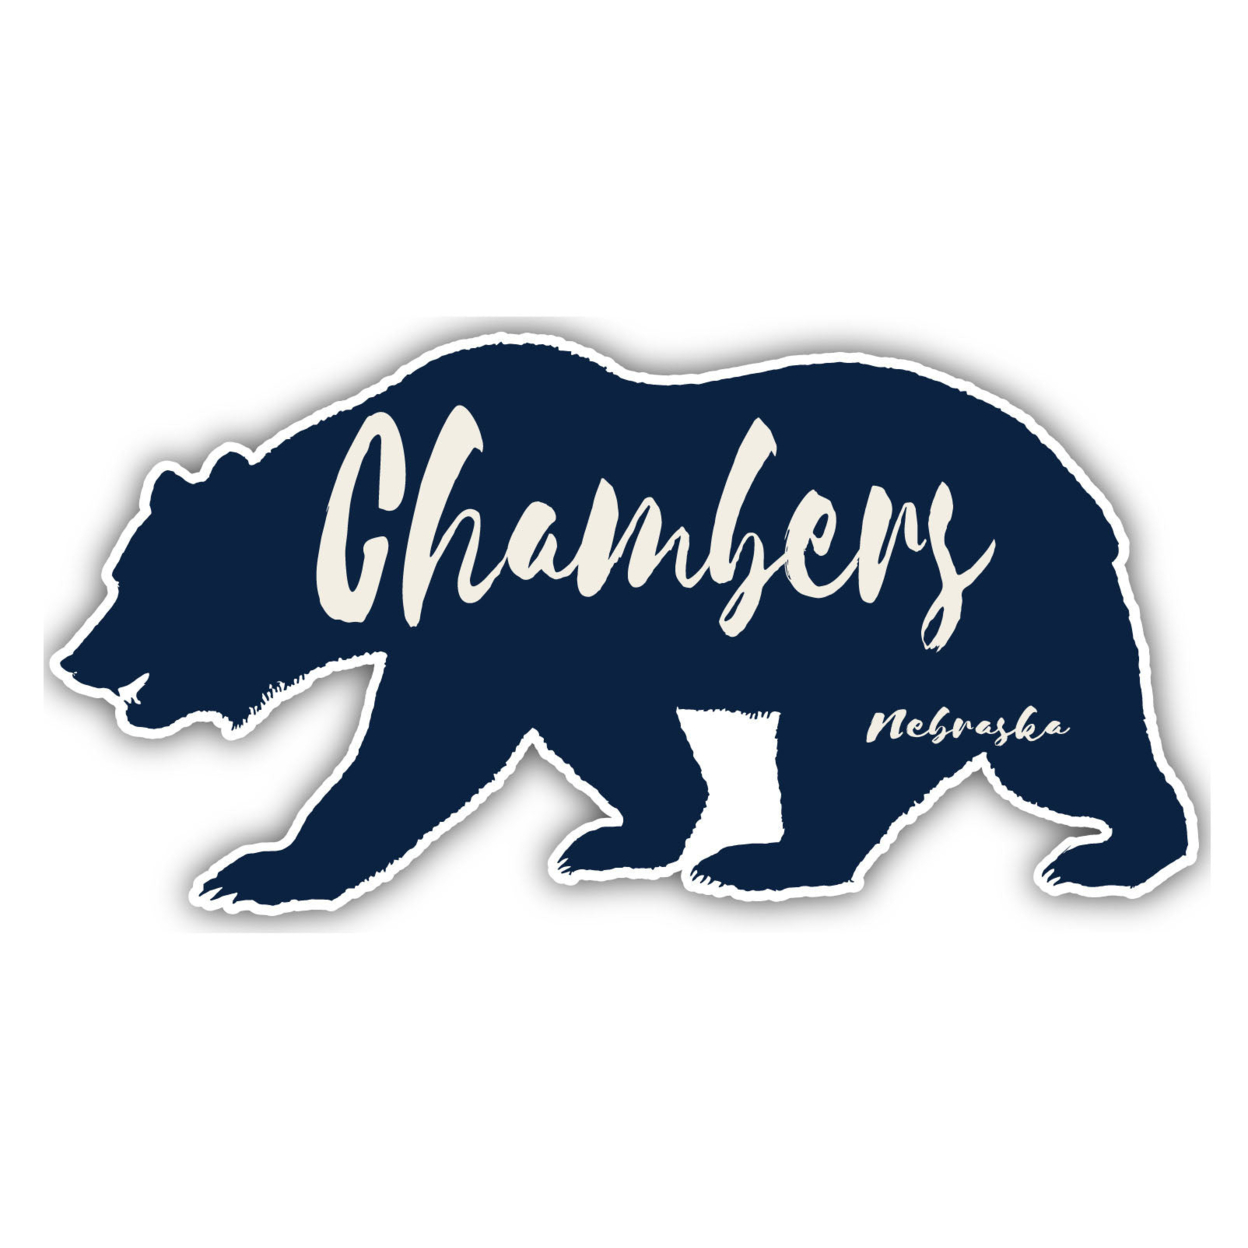 Chambers Nebraska Souvenir Decorative Stickers (Choose Theme And Size) - Single Unit, 4-Inch, Bear